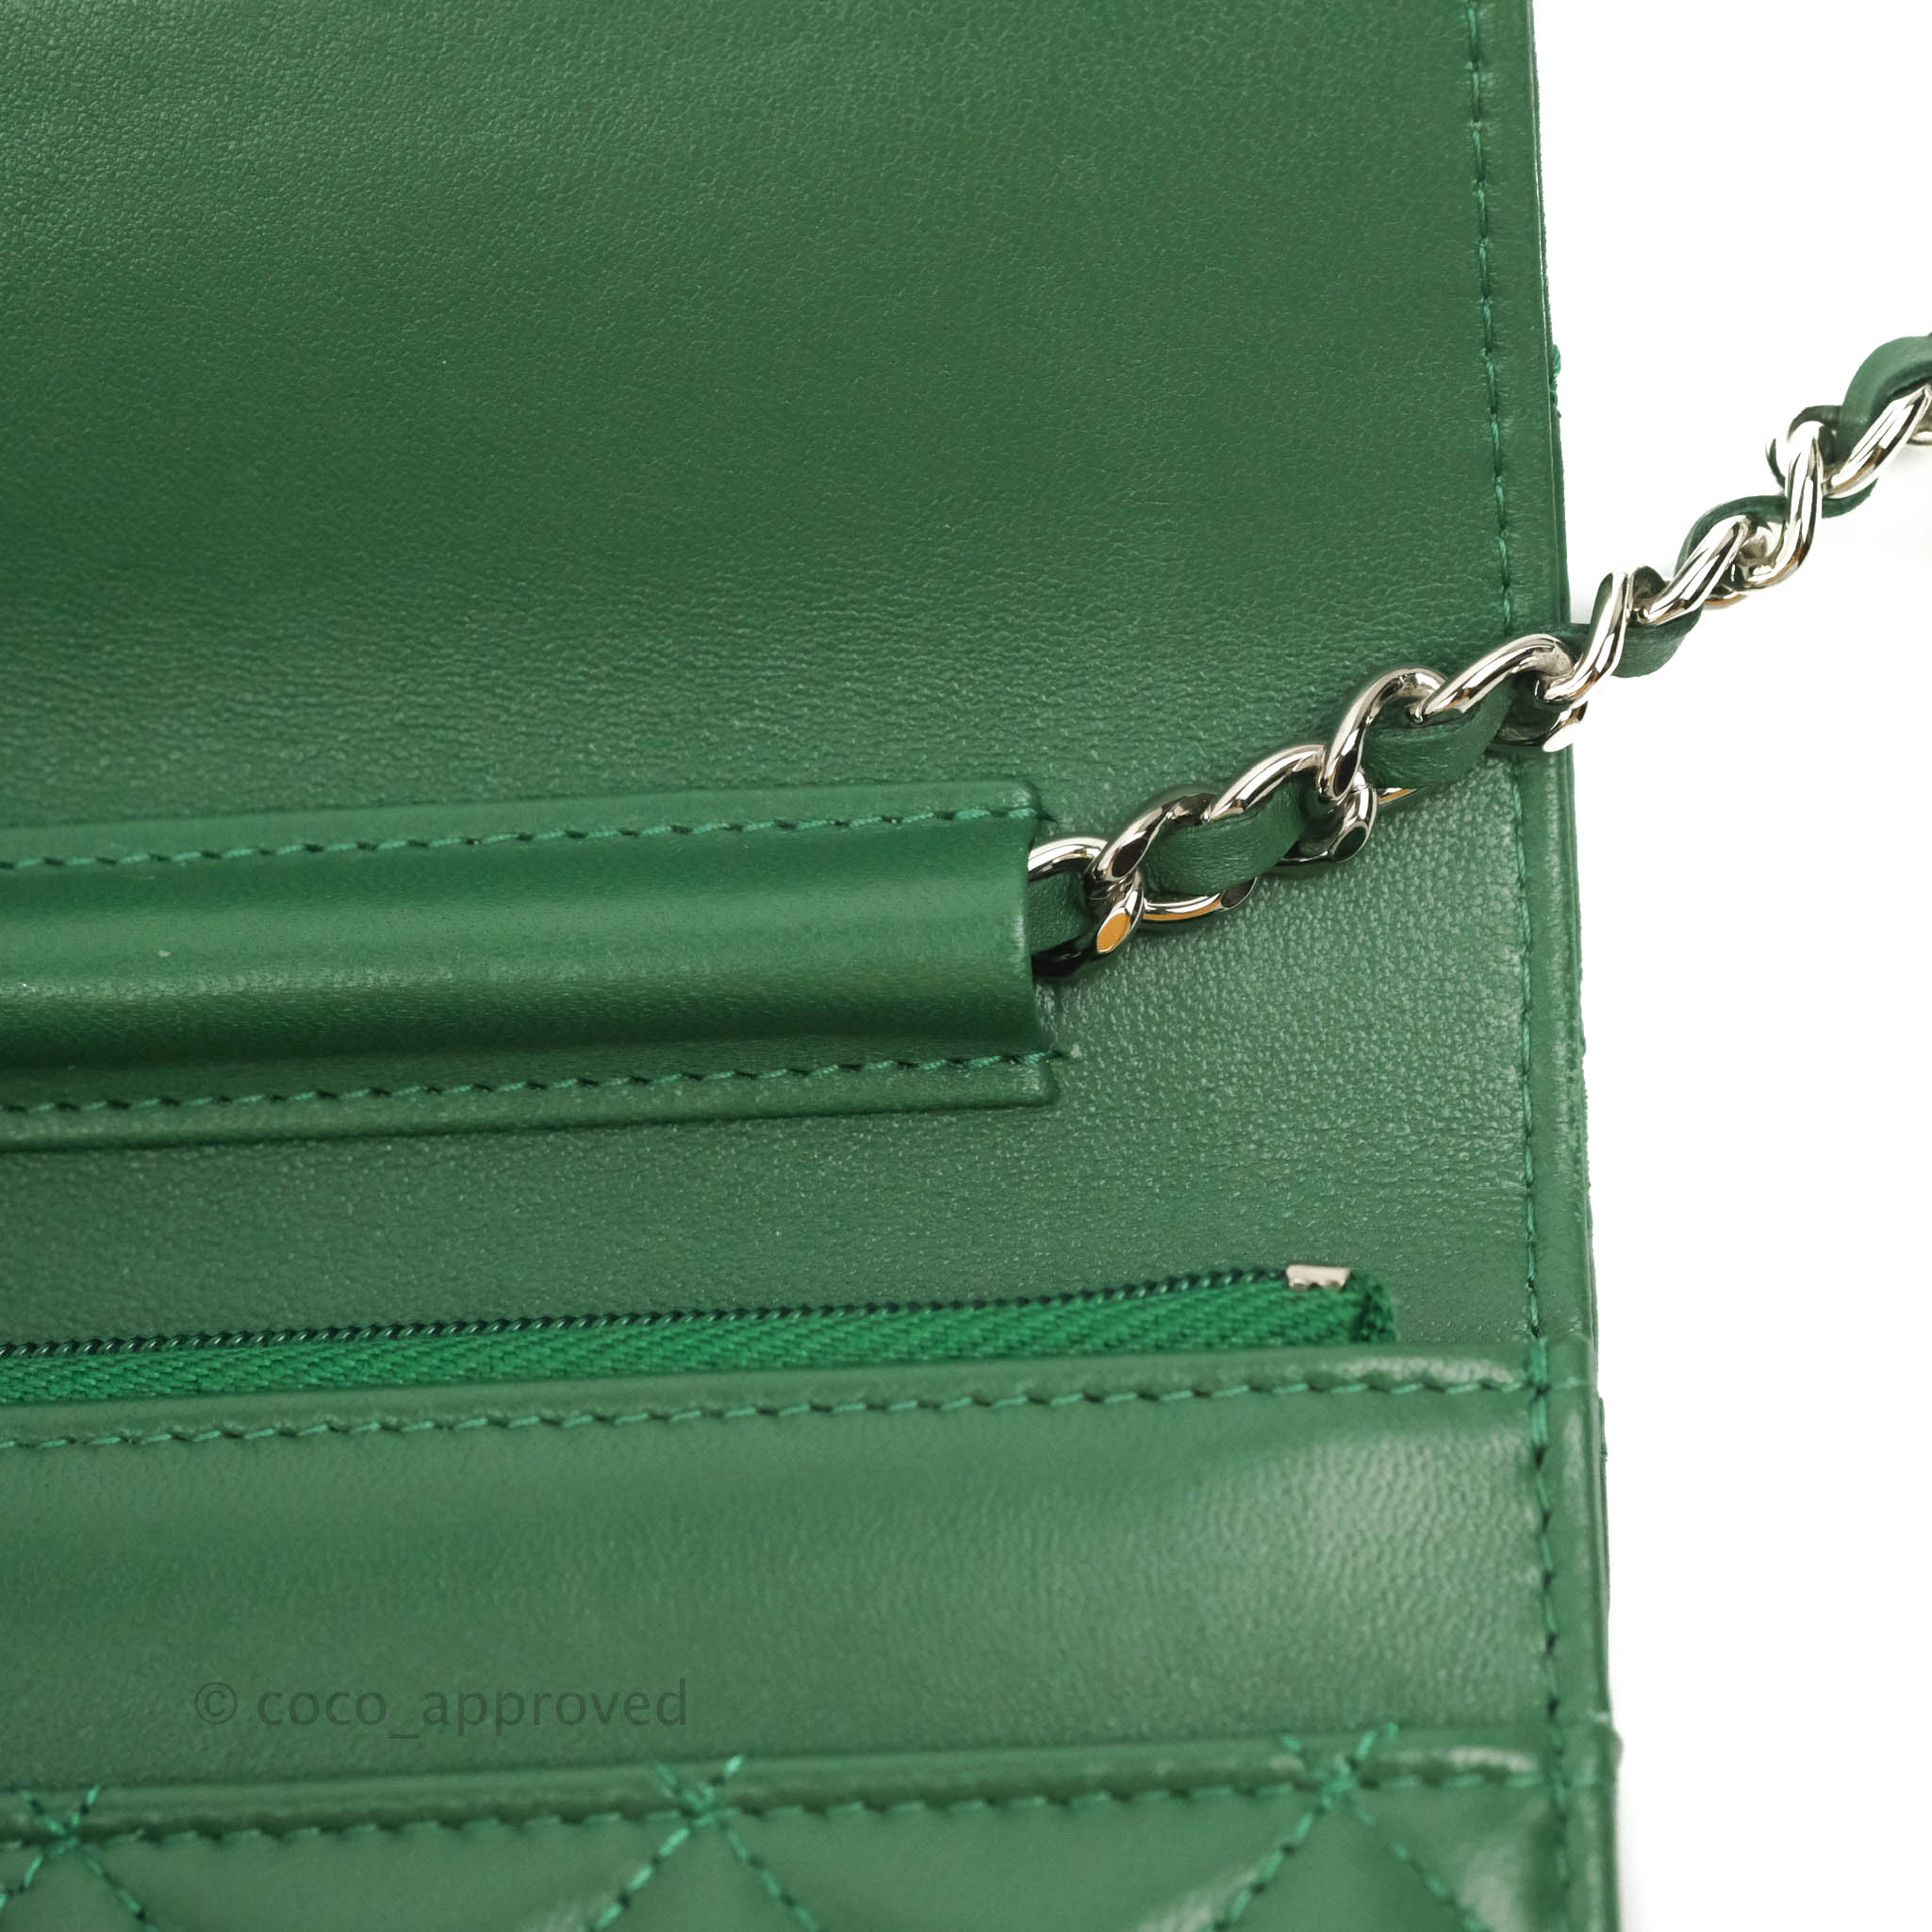 green chanel wallet